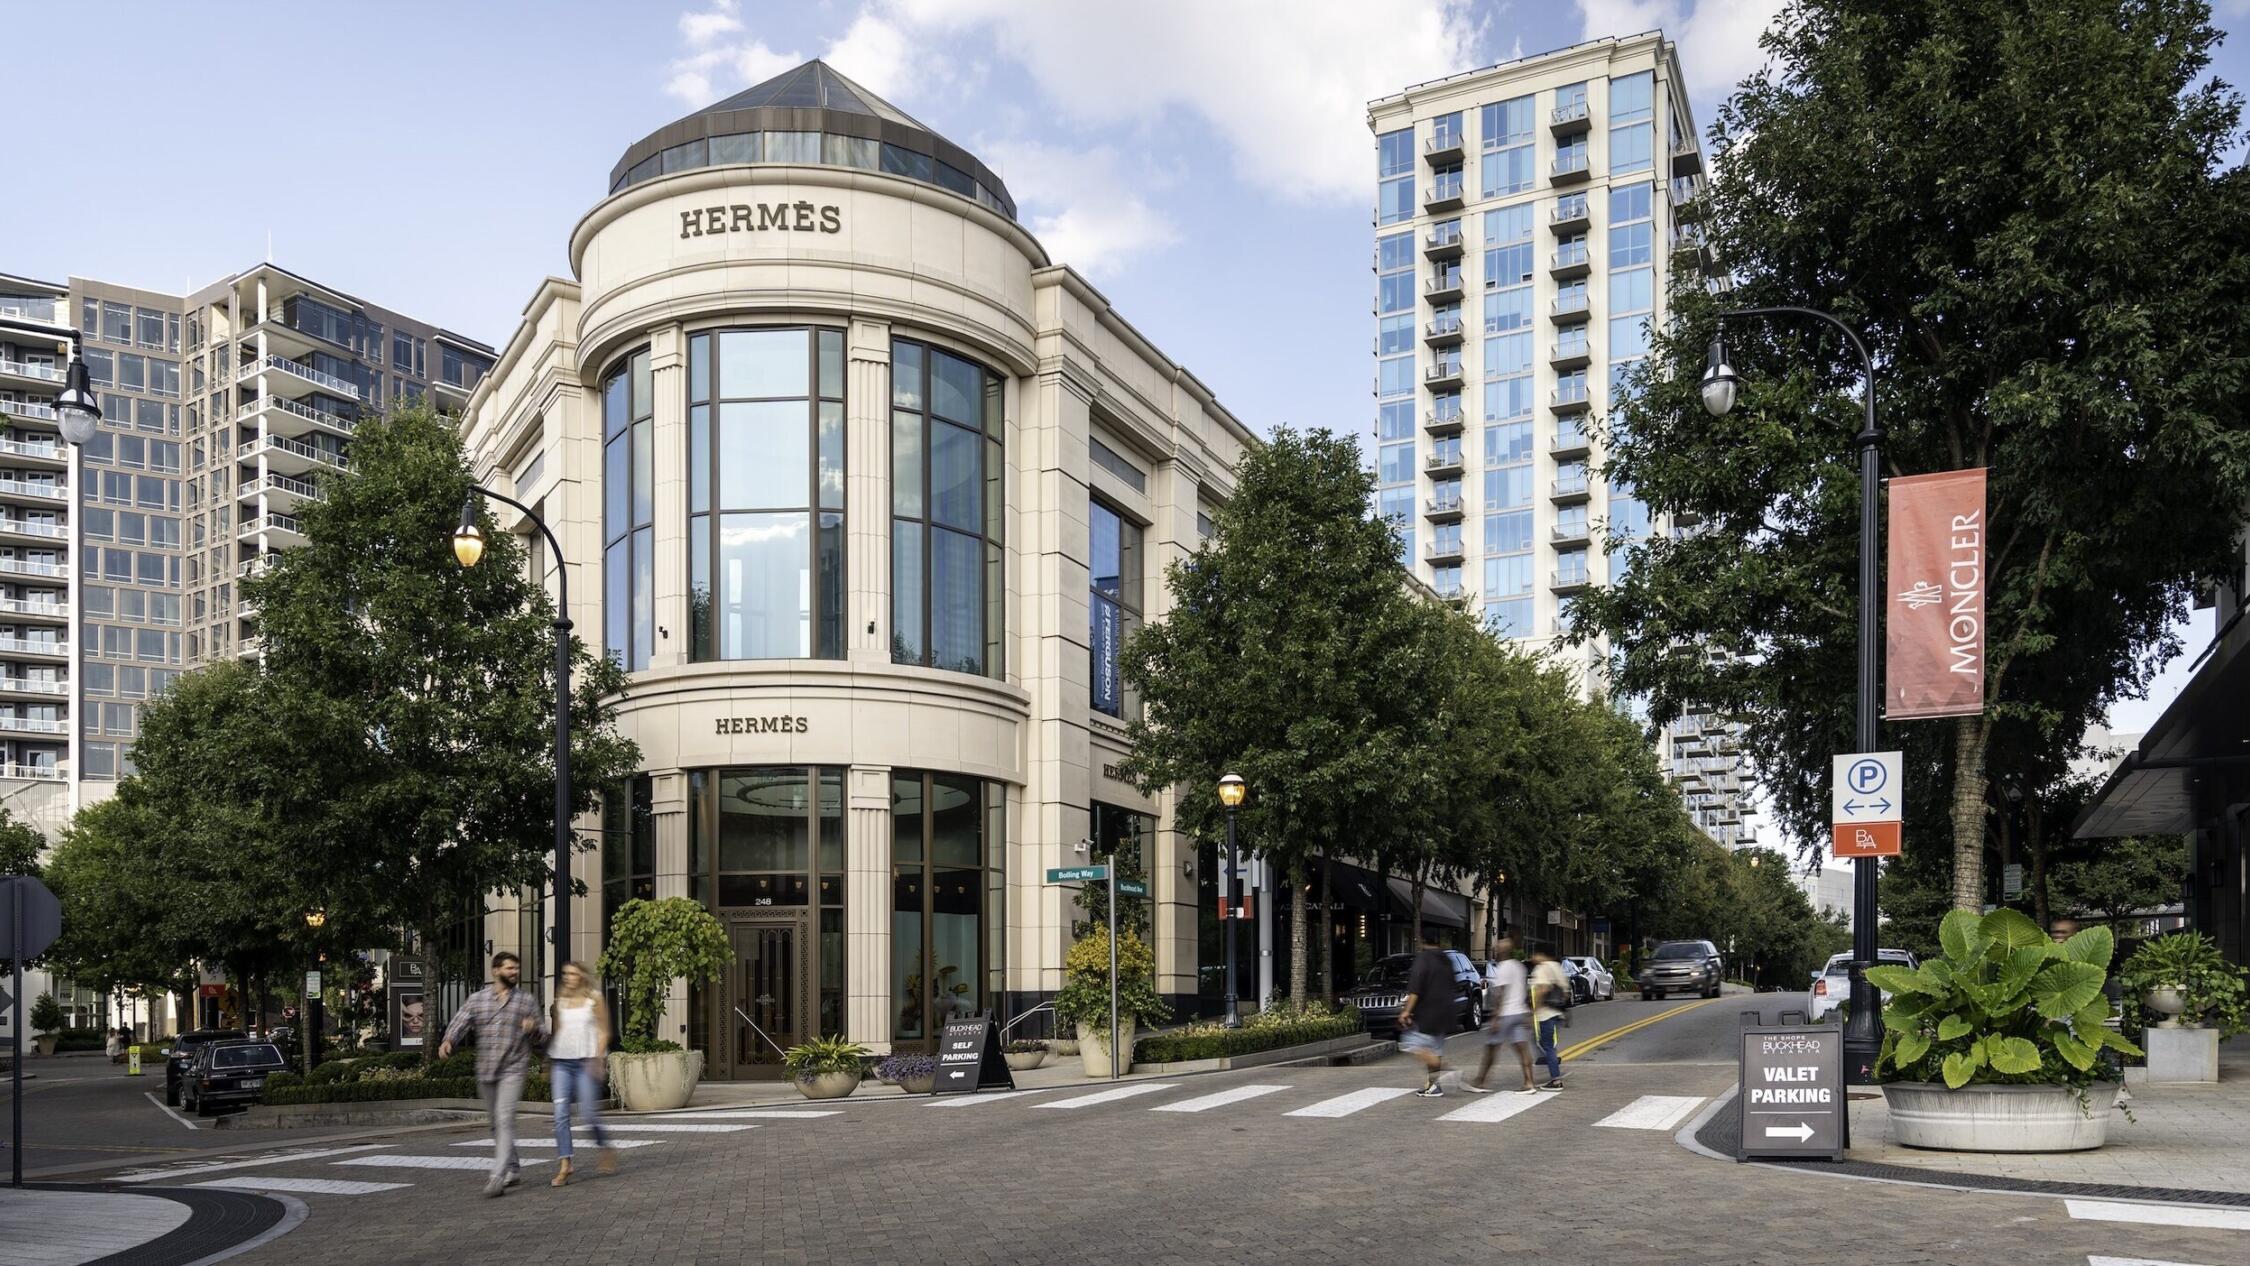 Buckhead: Atlanta's Luxury Shopping Destination